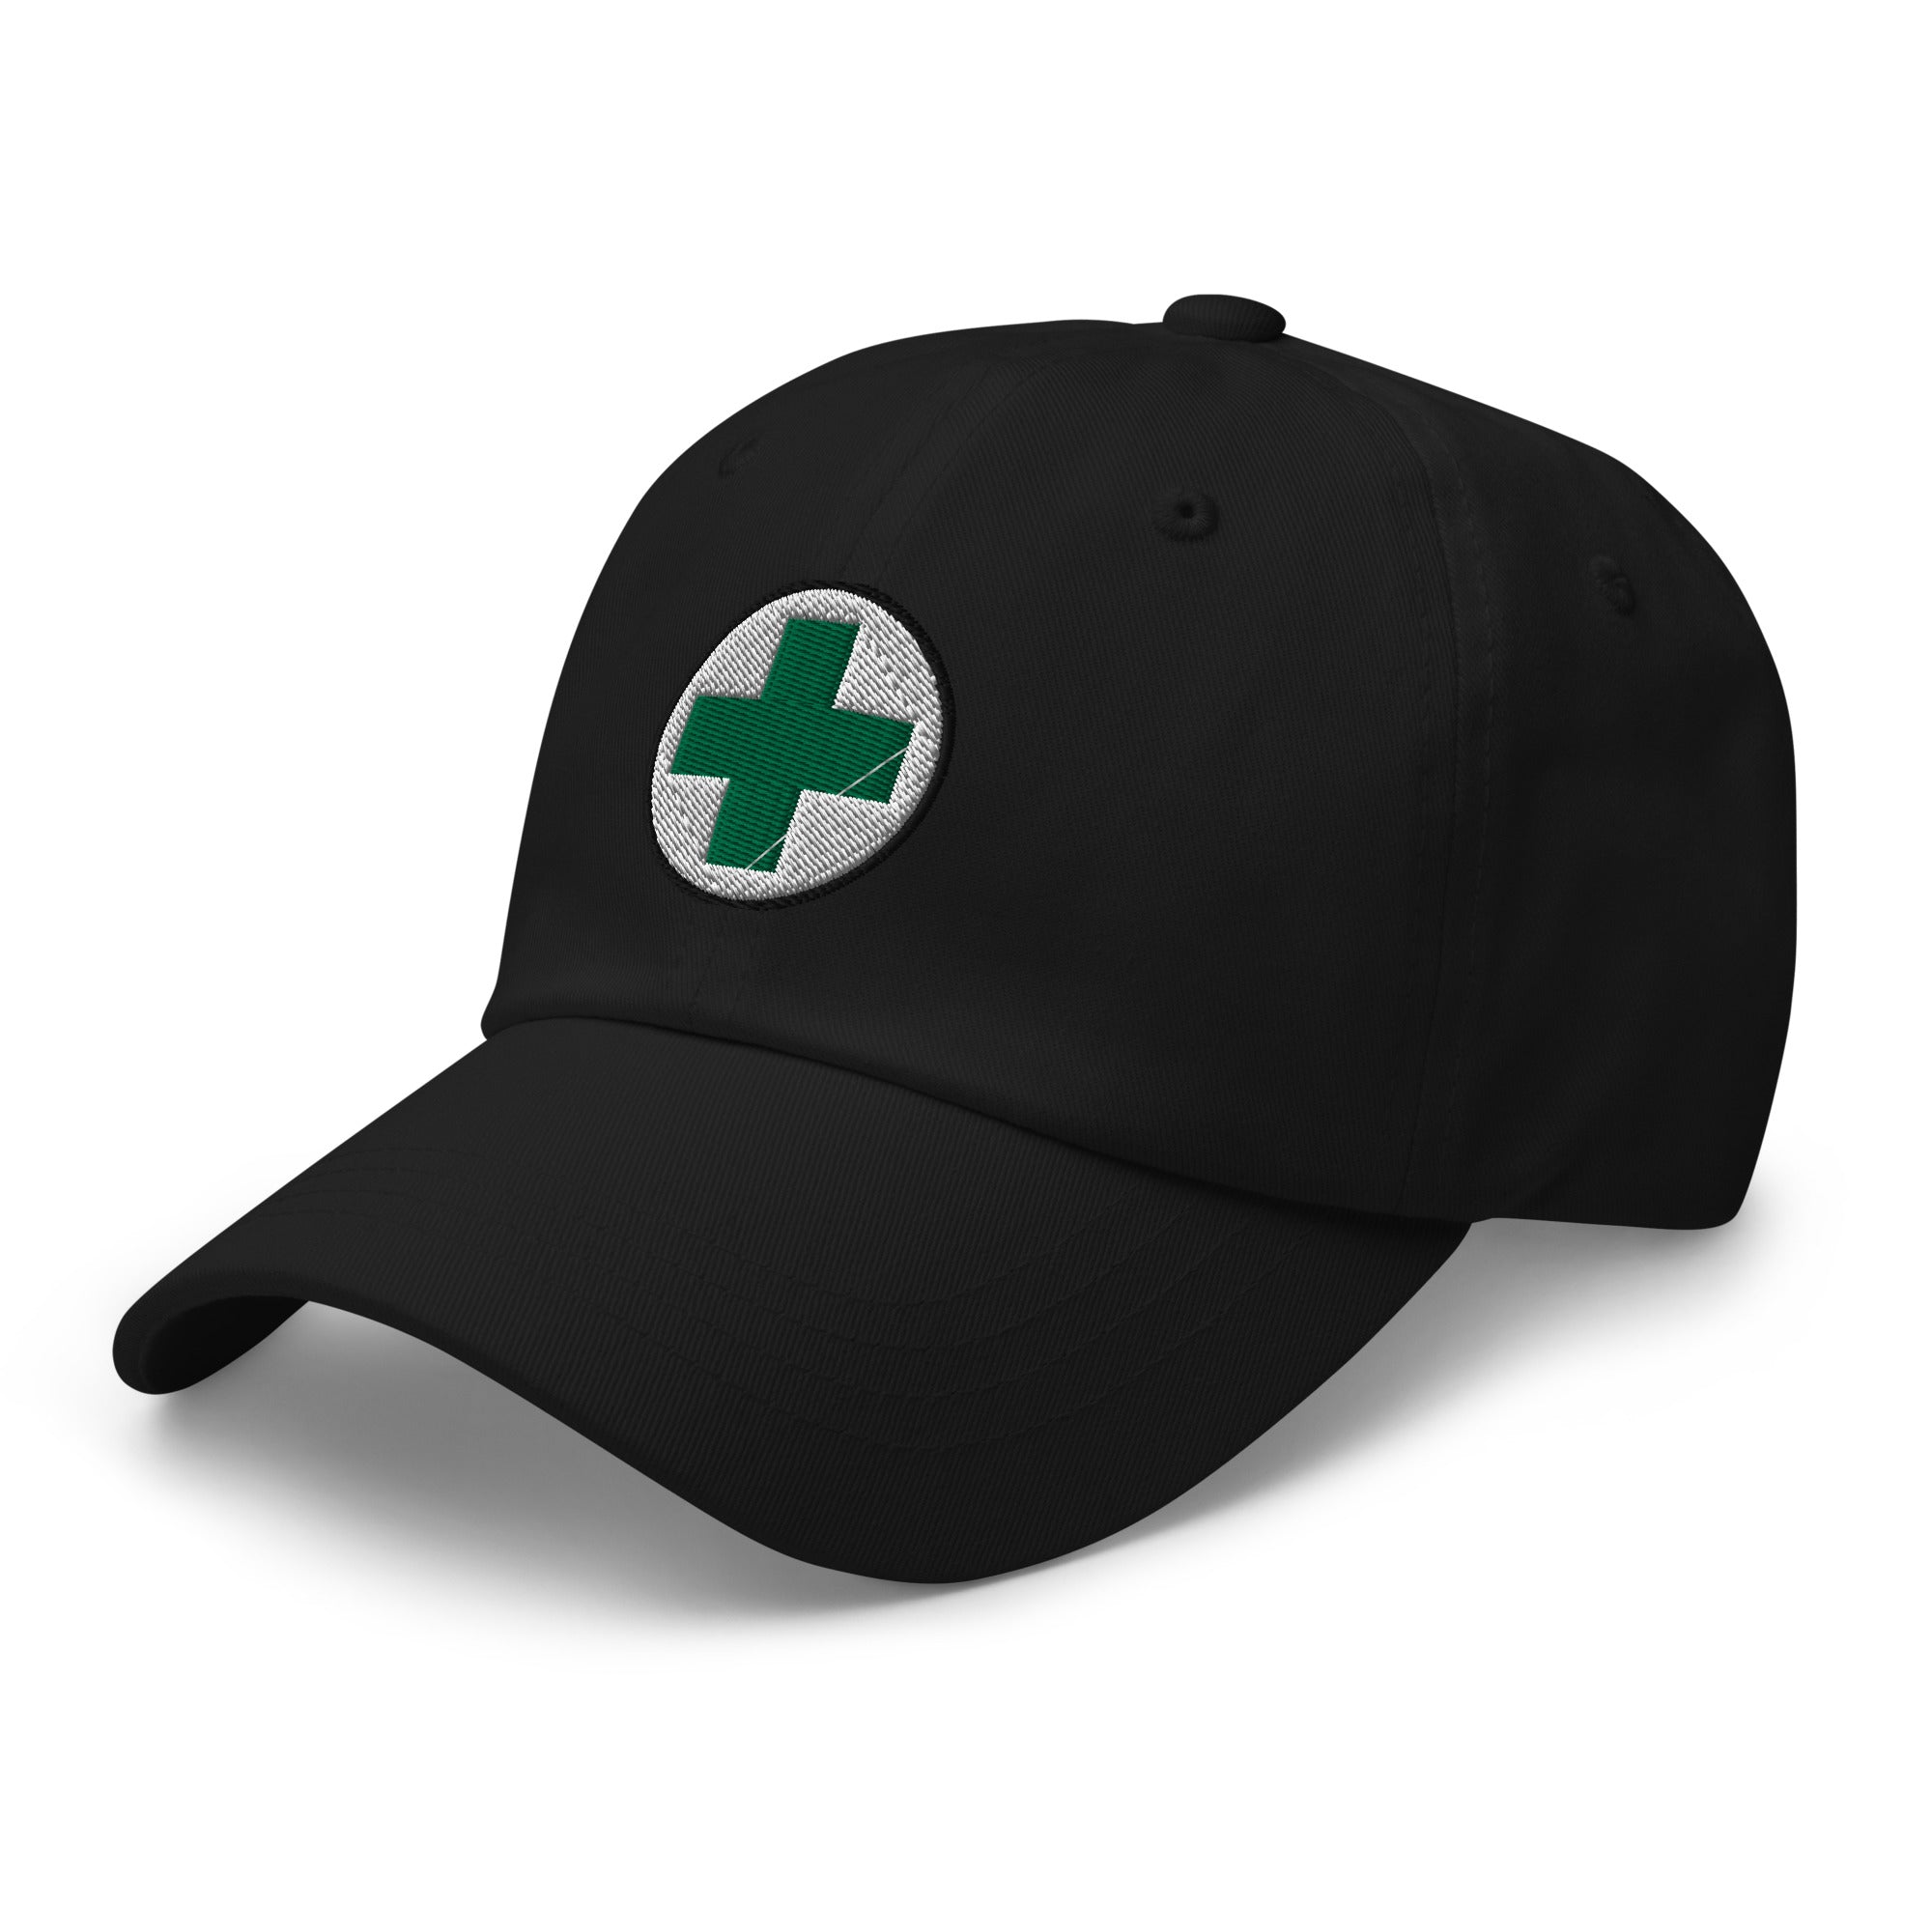 Medical Marijuana Symbol Embroidered Baseball Cap Cannabis Sativa Plant Dad hat - Edge of Life Designs